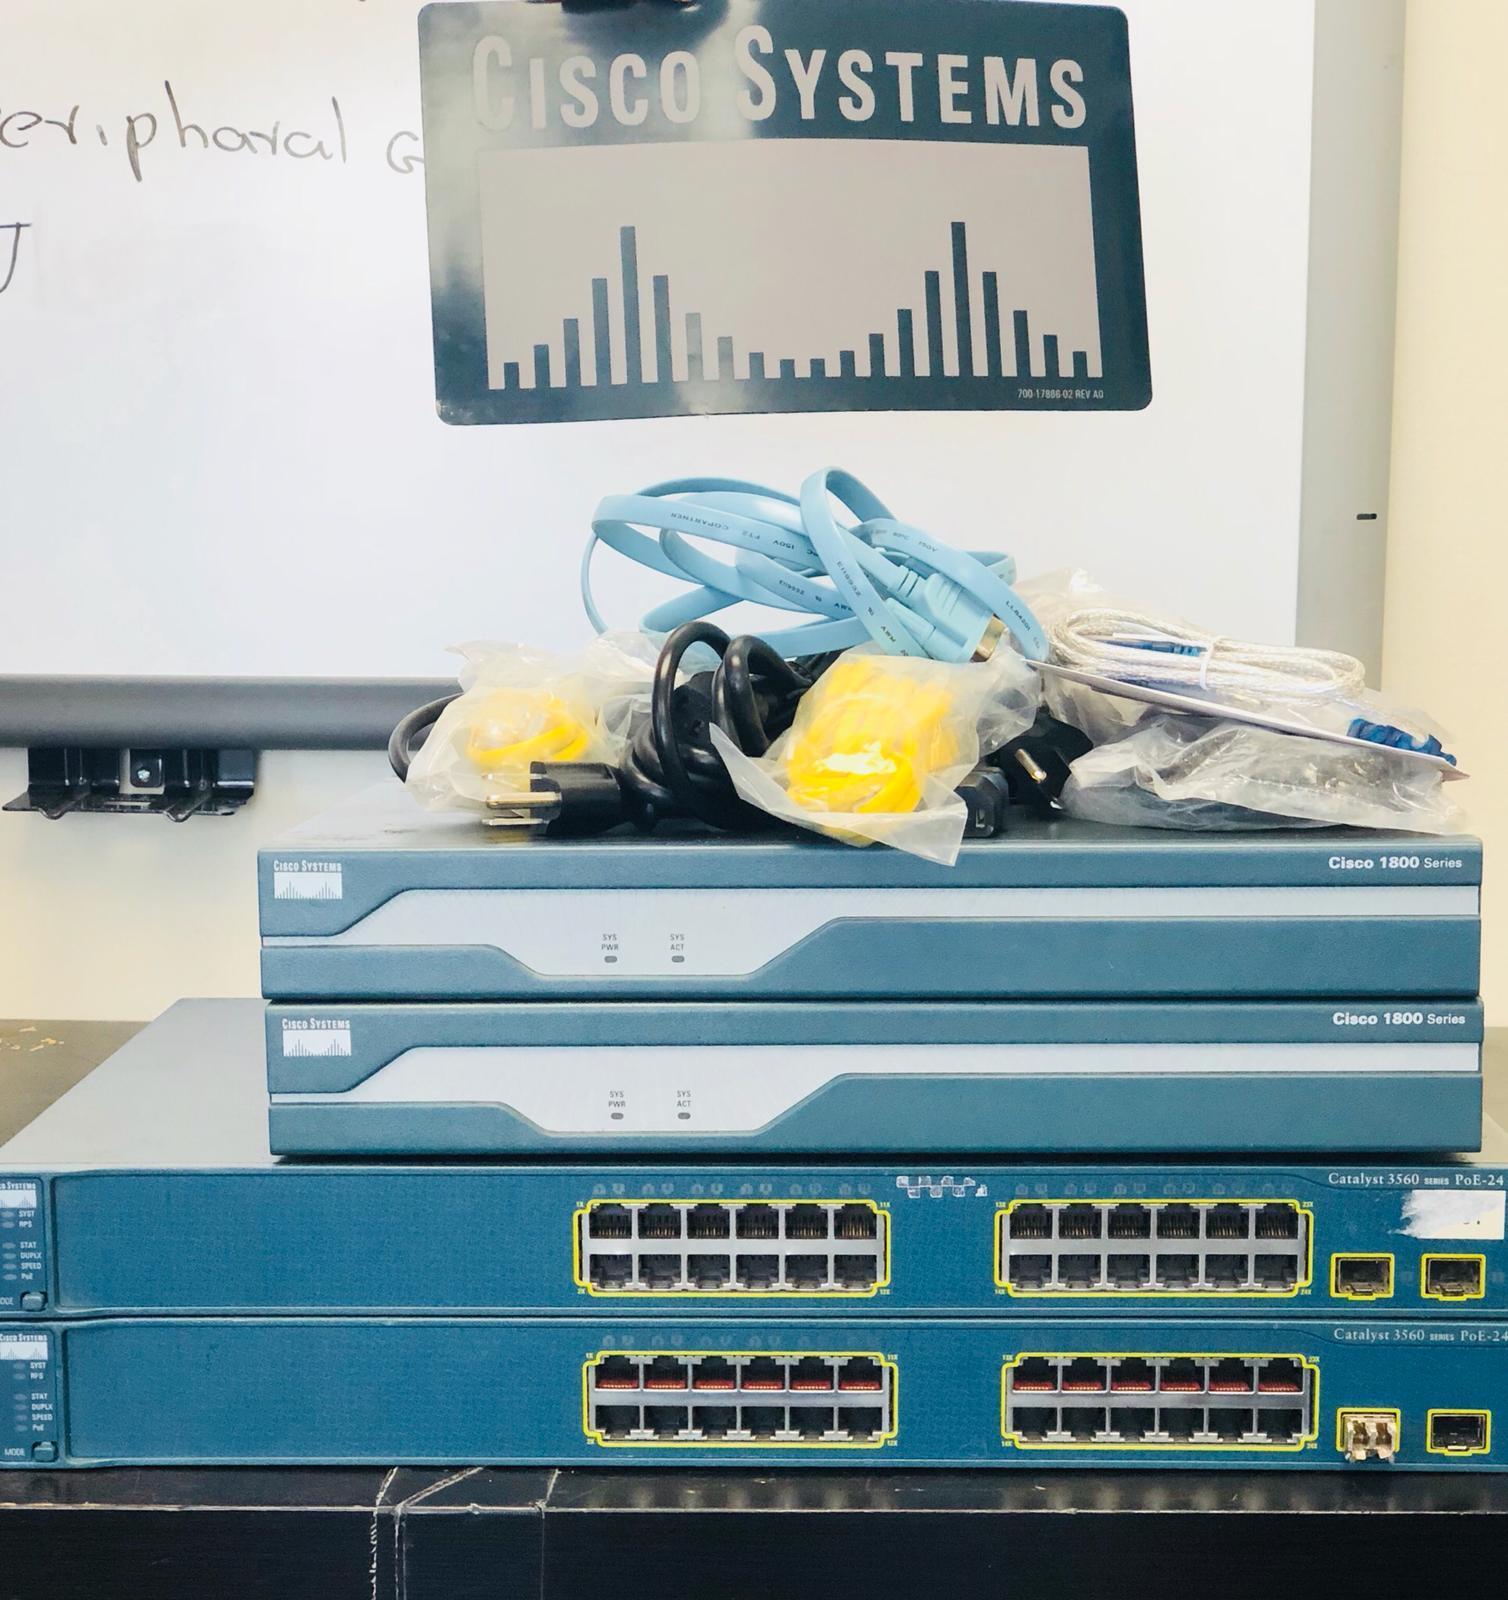 New arrival Advanced Cisco CCNA V3 and CCNP home lab kit